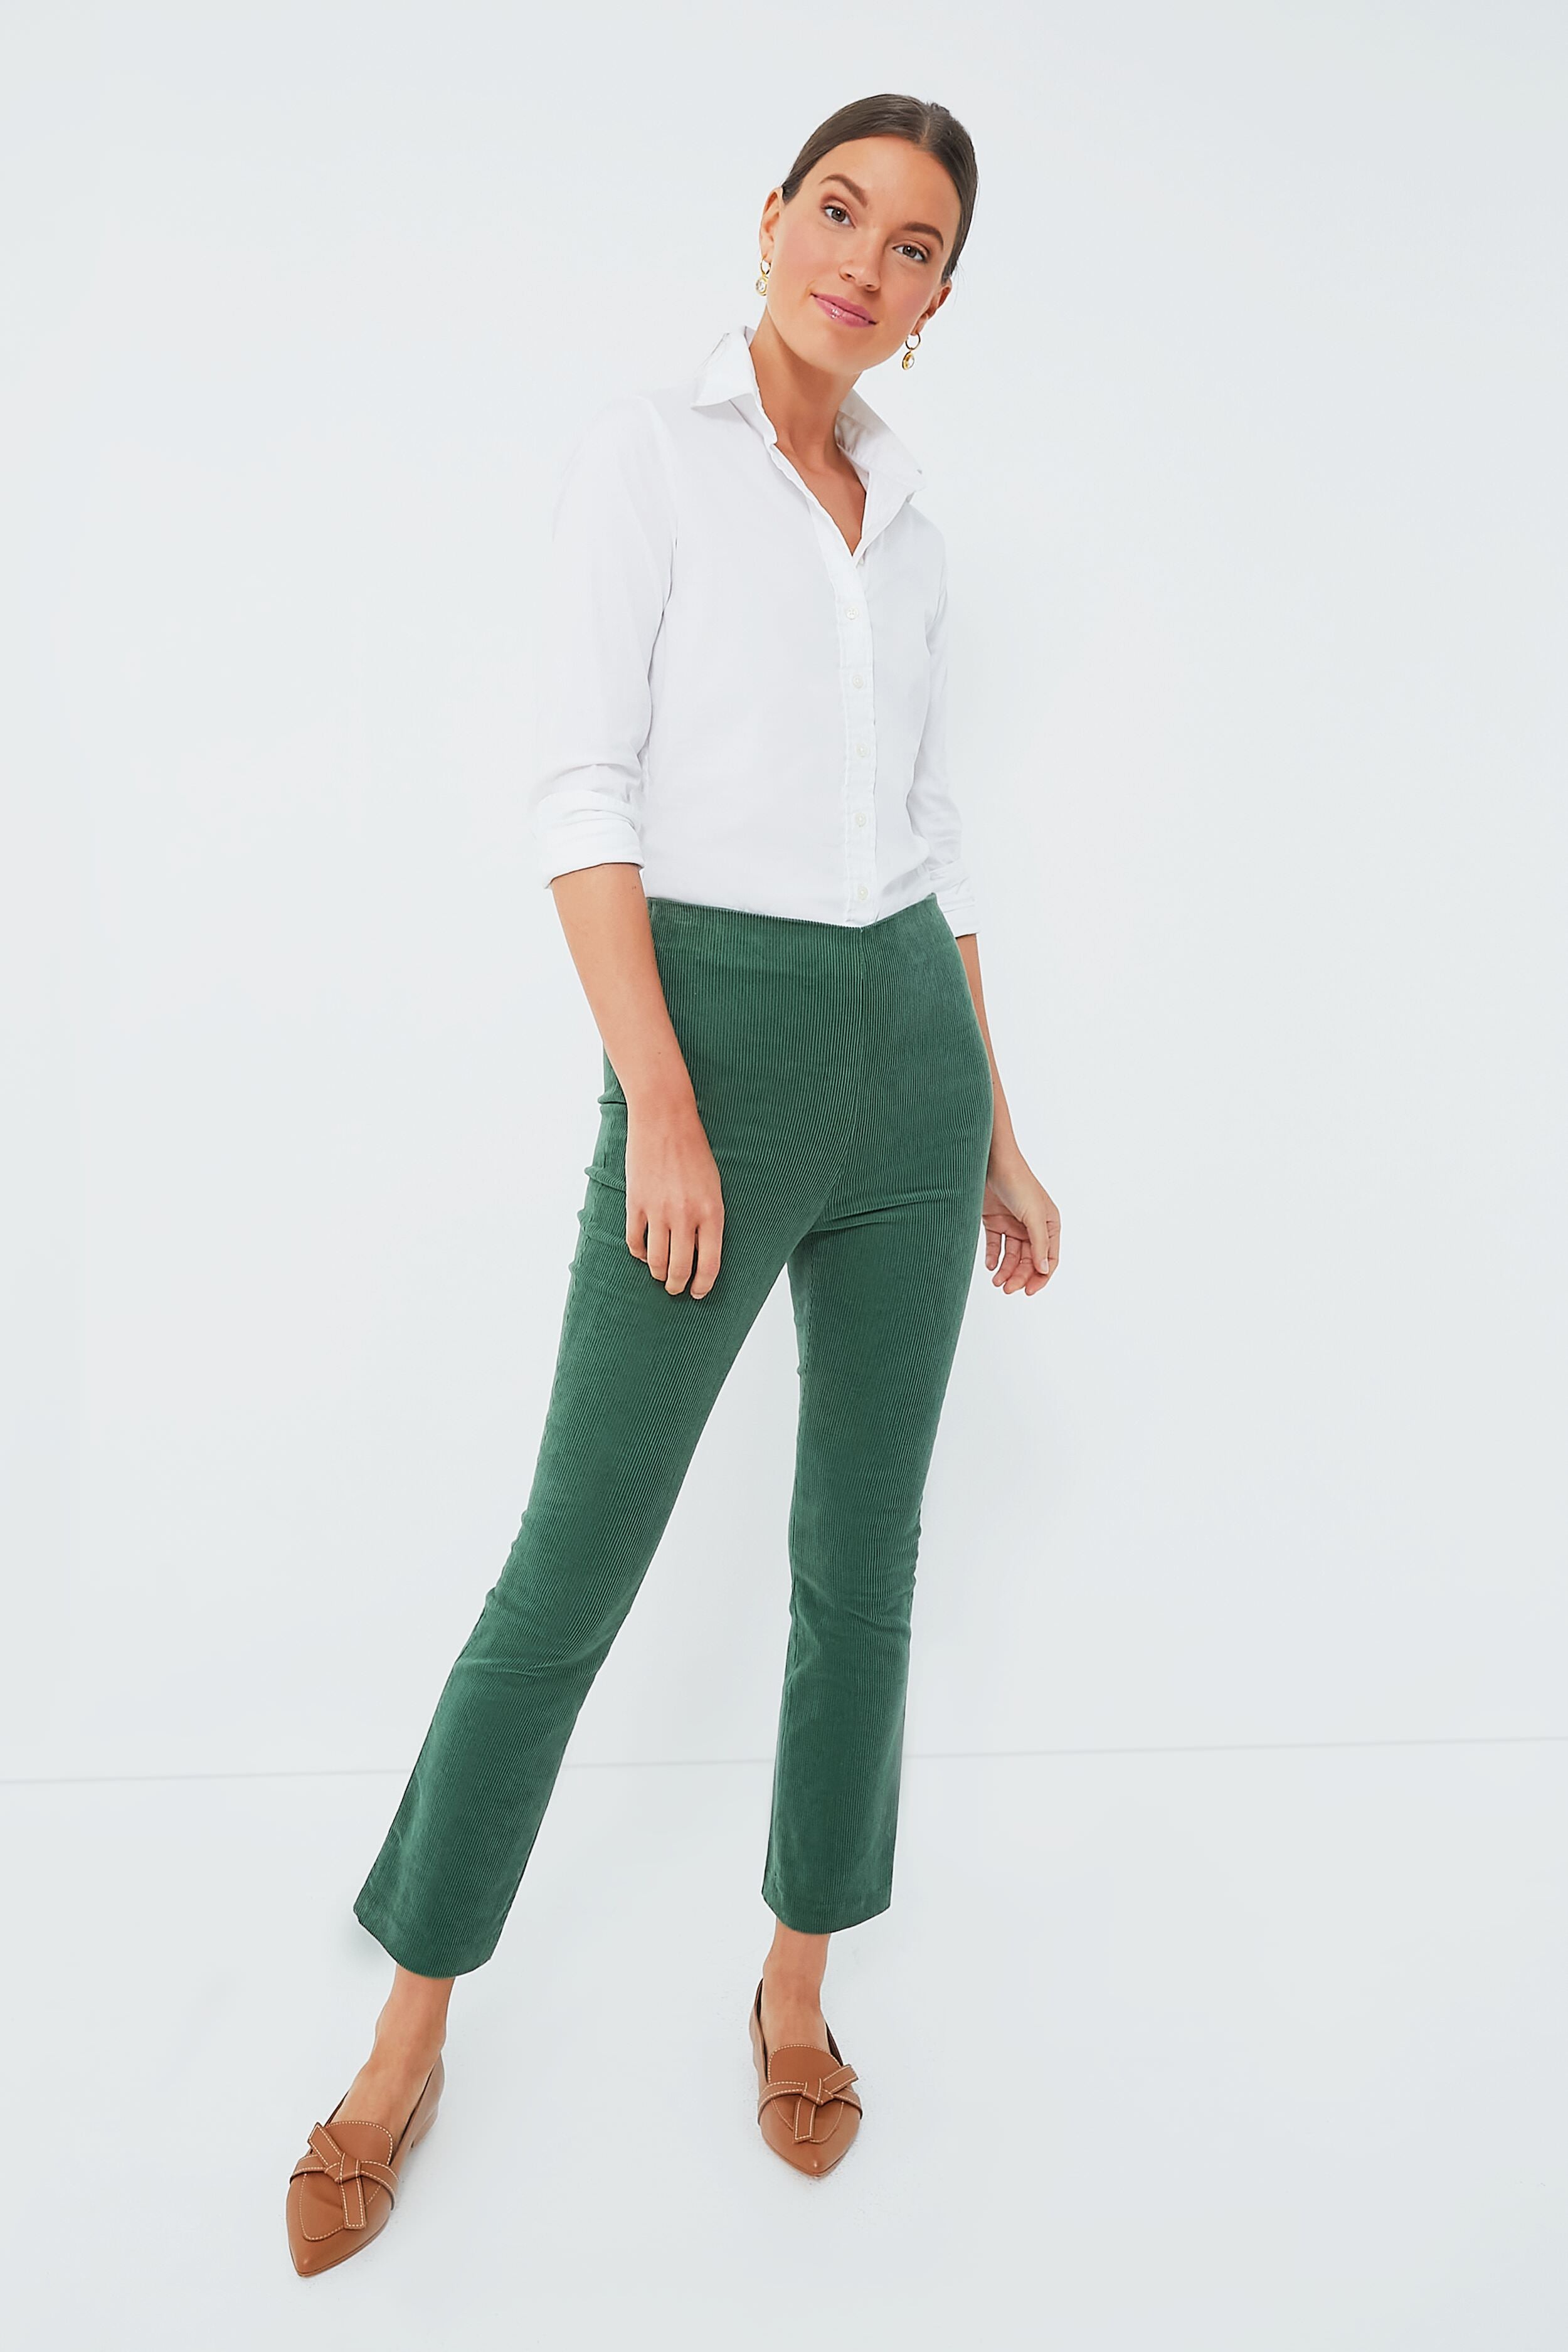 Zara Woman Army Green Pant Cropped Trousers Women's S… - Gem